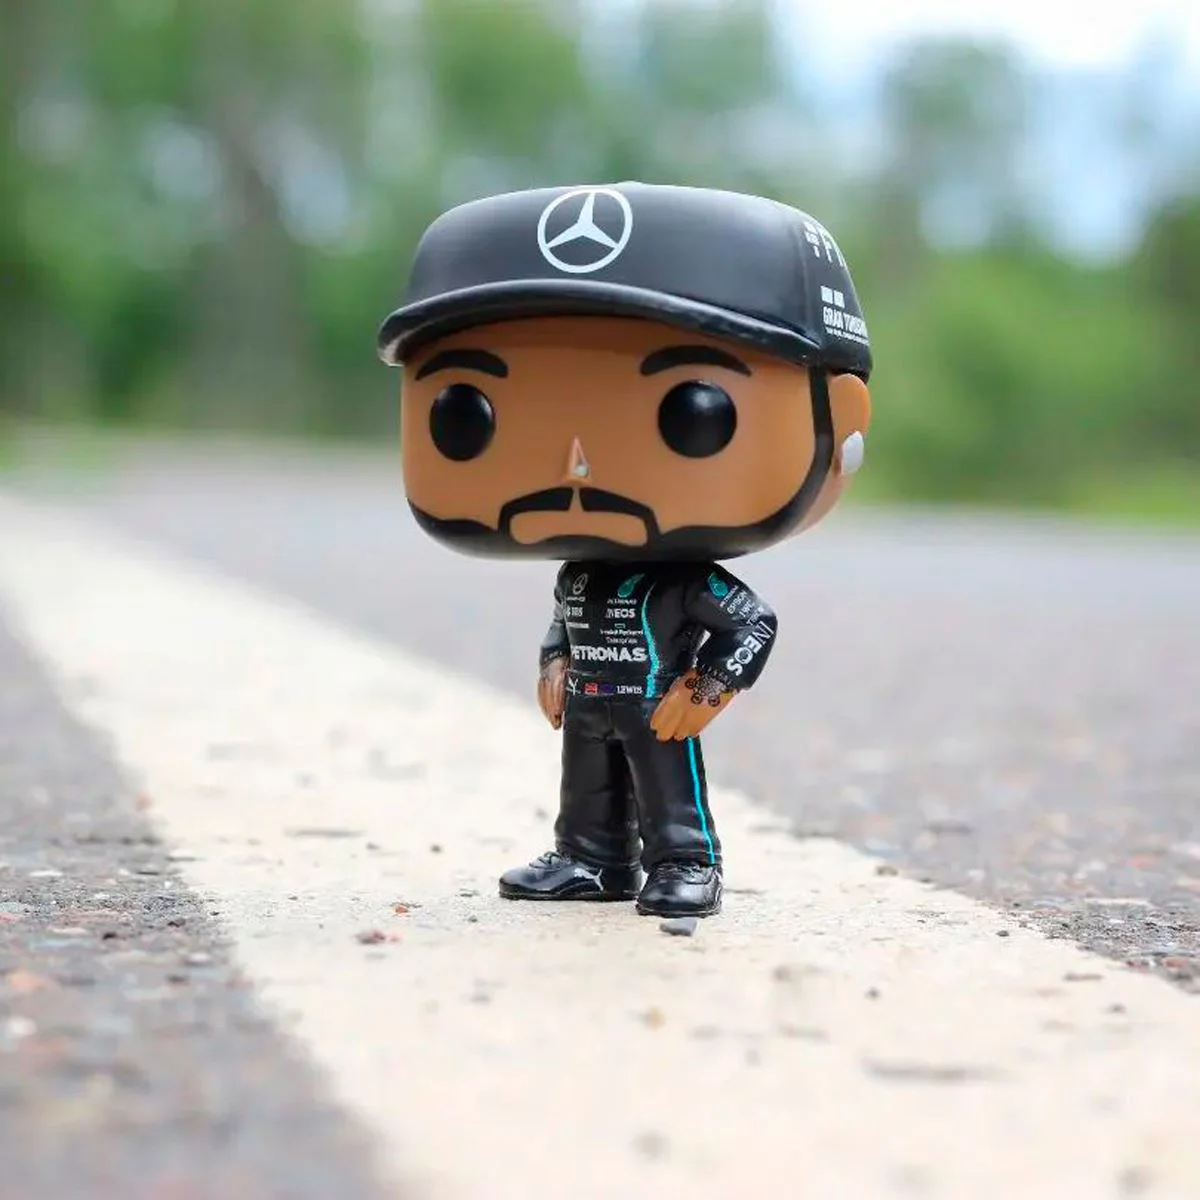 Figurina Funko Pop! Lewis Hamilton Formula 1